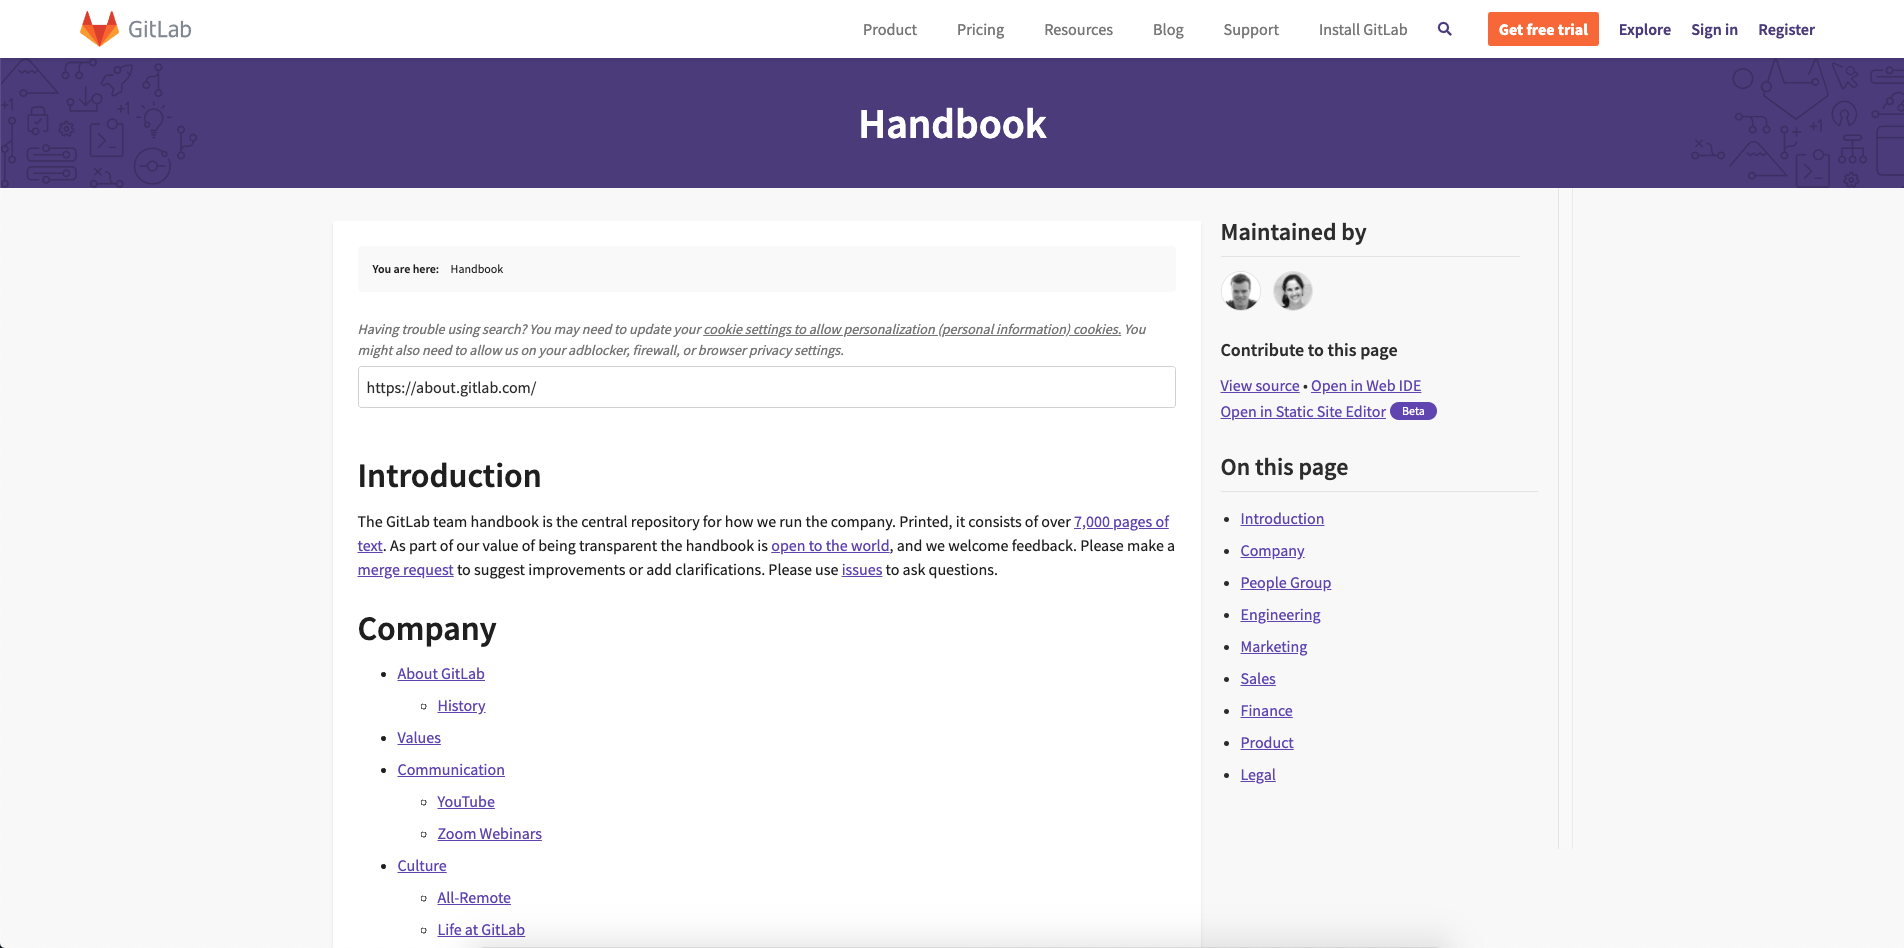 GitLab Employee Handbook